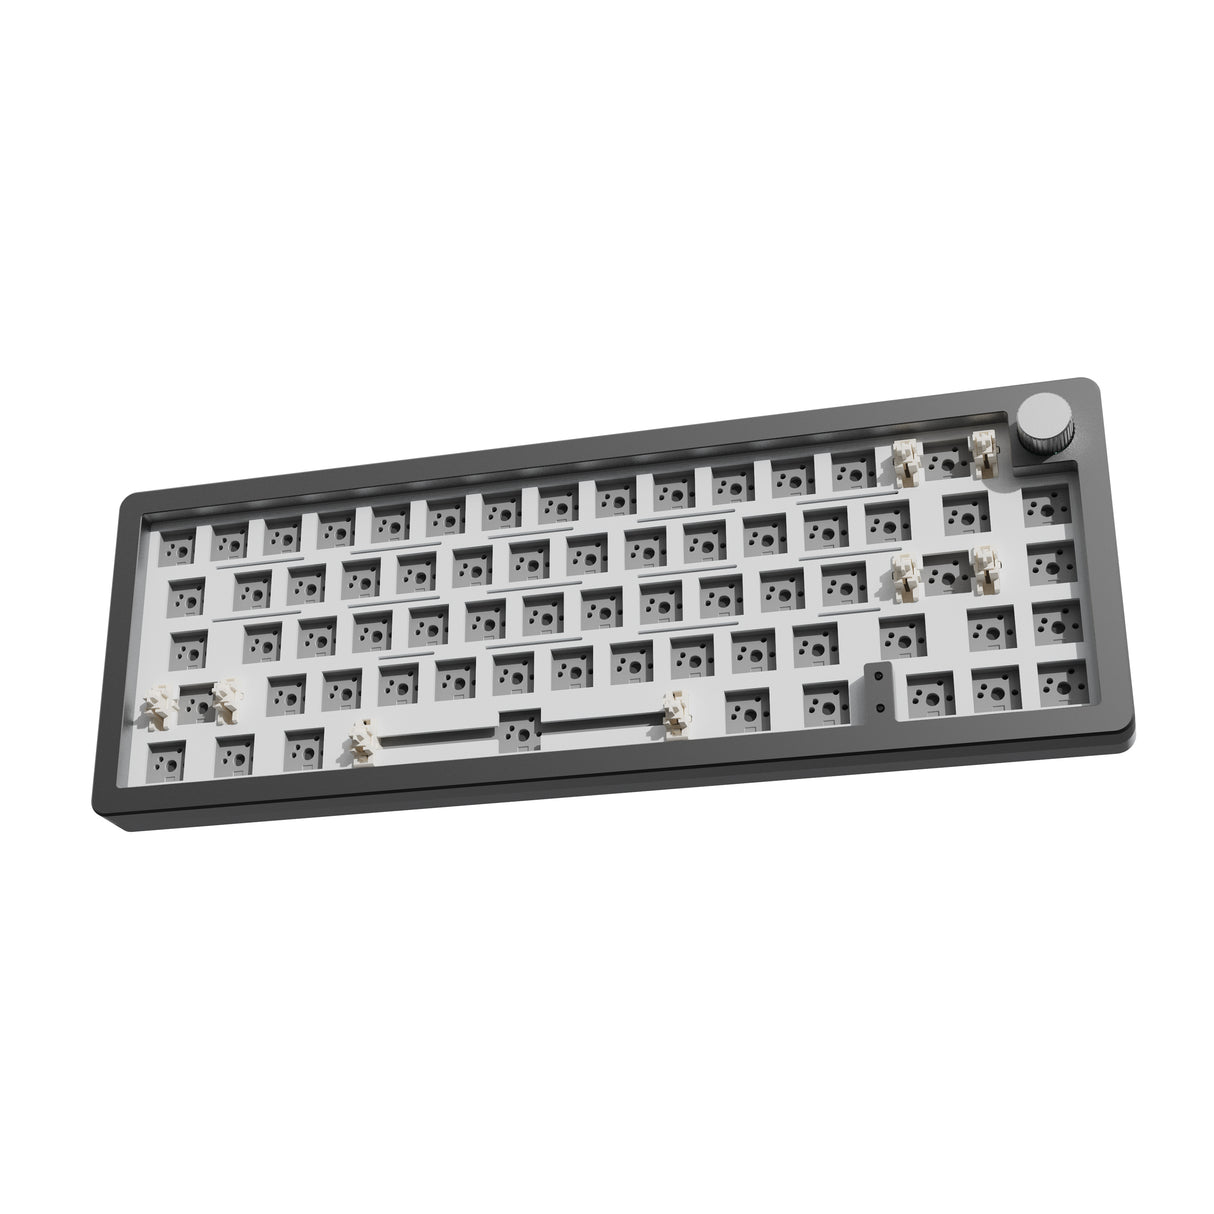 YUNZII AL66 Knob CNC Aluminum Wireless Mechanical Keyboard